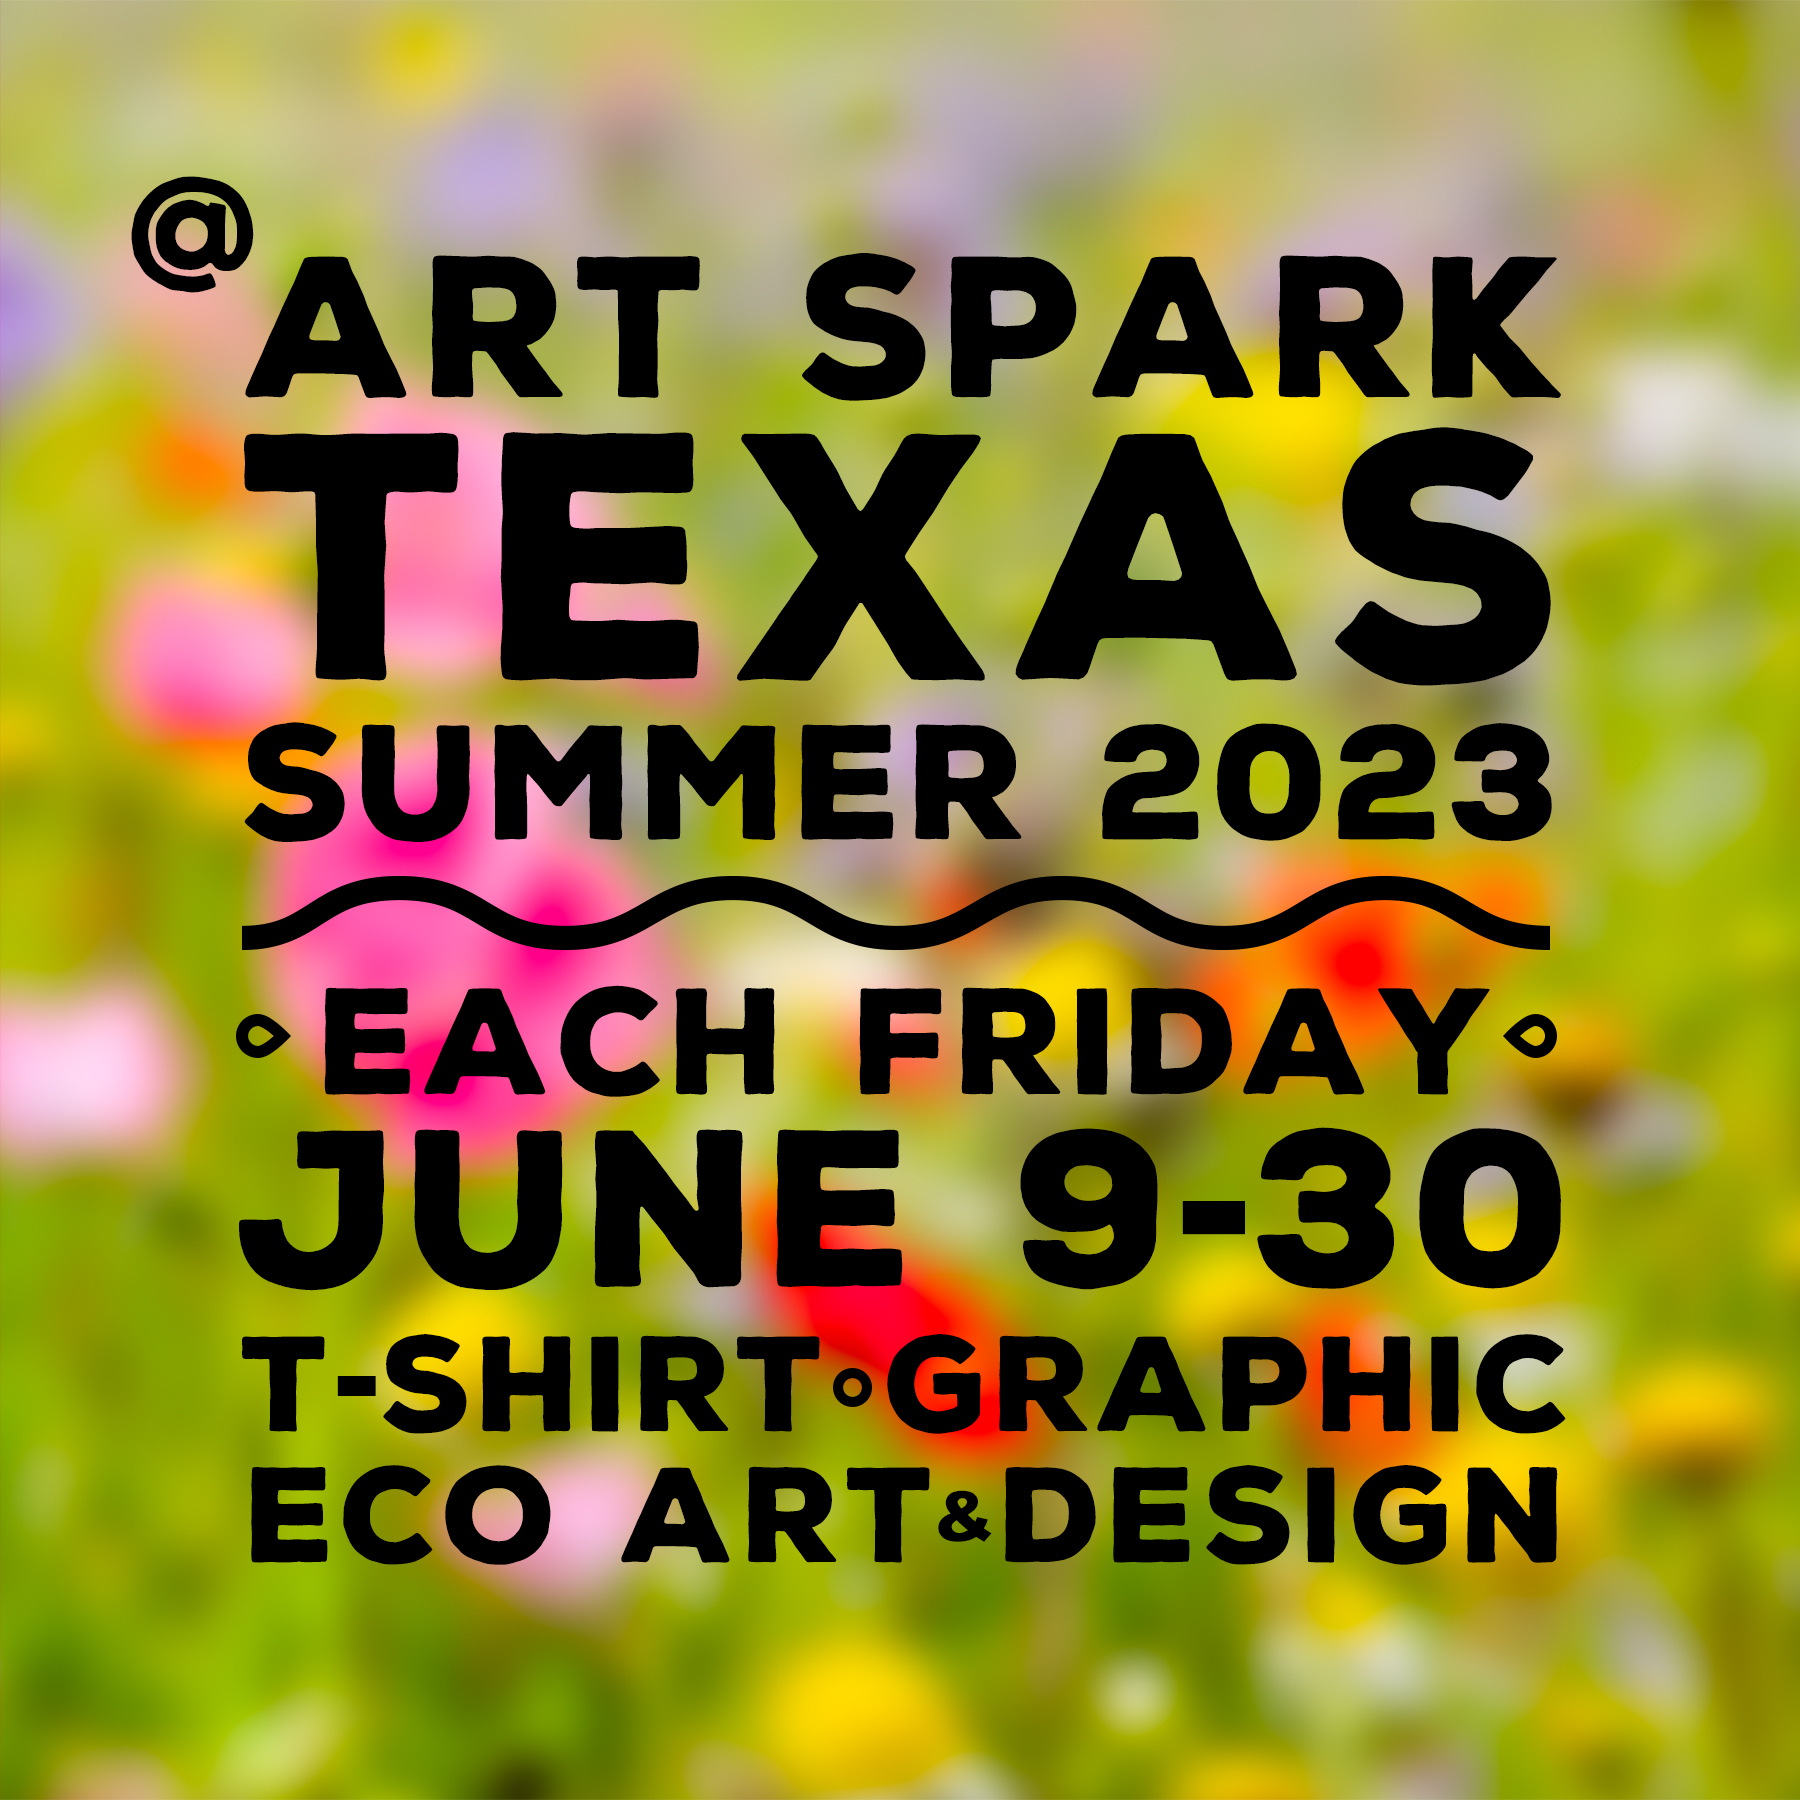 Art Spark Texas, Think Like a Designer, Summer 2023, Each Friday, June 9-30, T-Shirt, Graphics, Eco Art and Design.